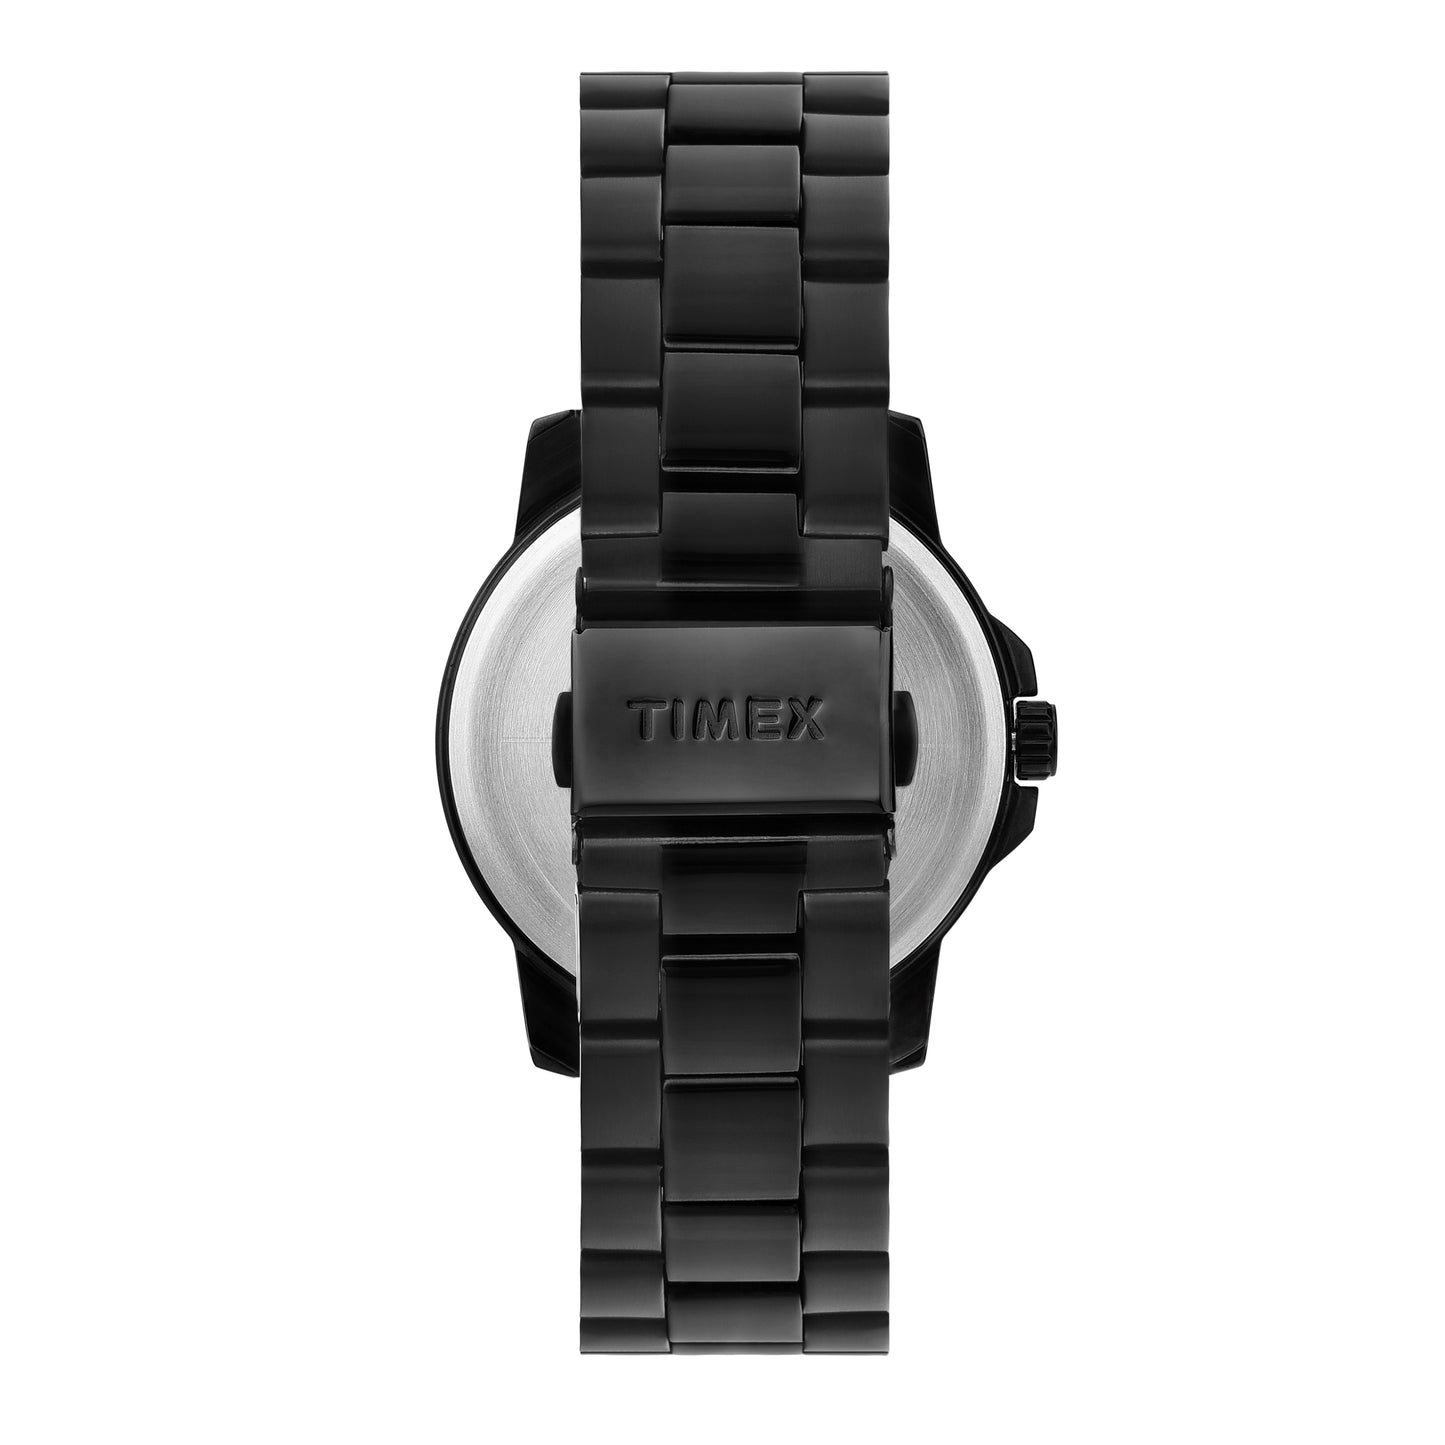 Timex Grey Dial Men Analog Watch - TWEG17211